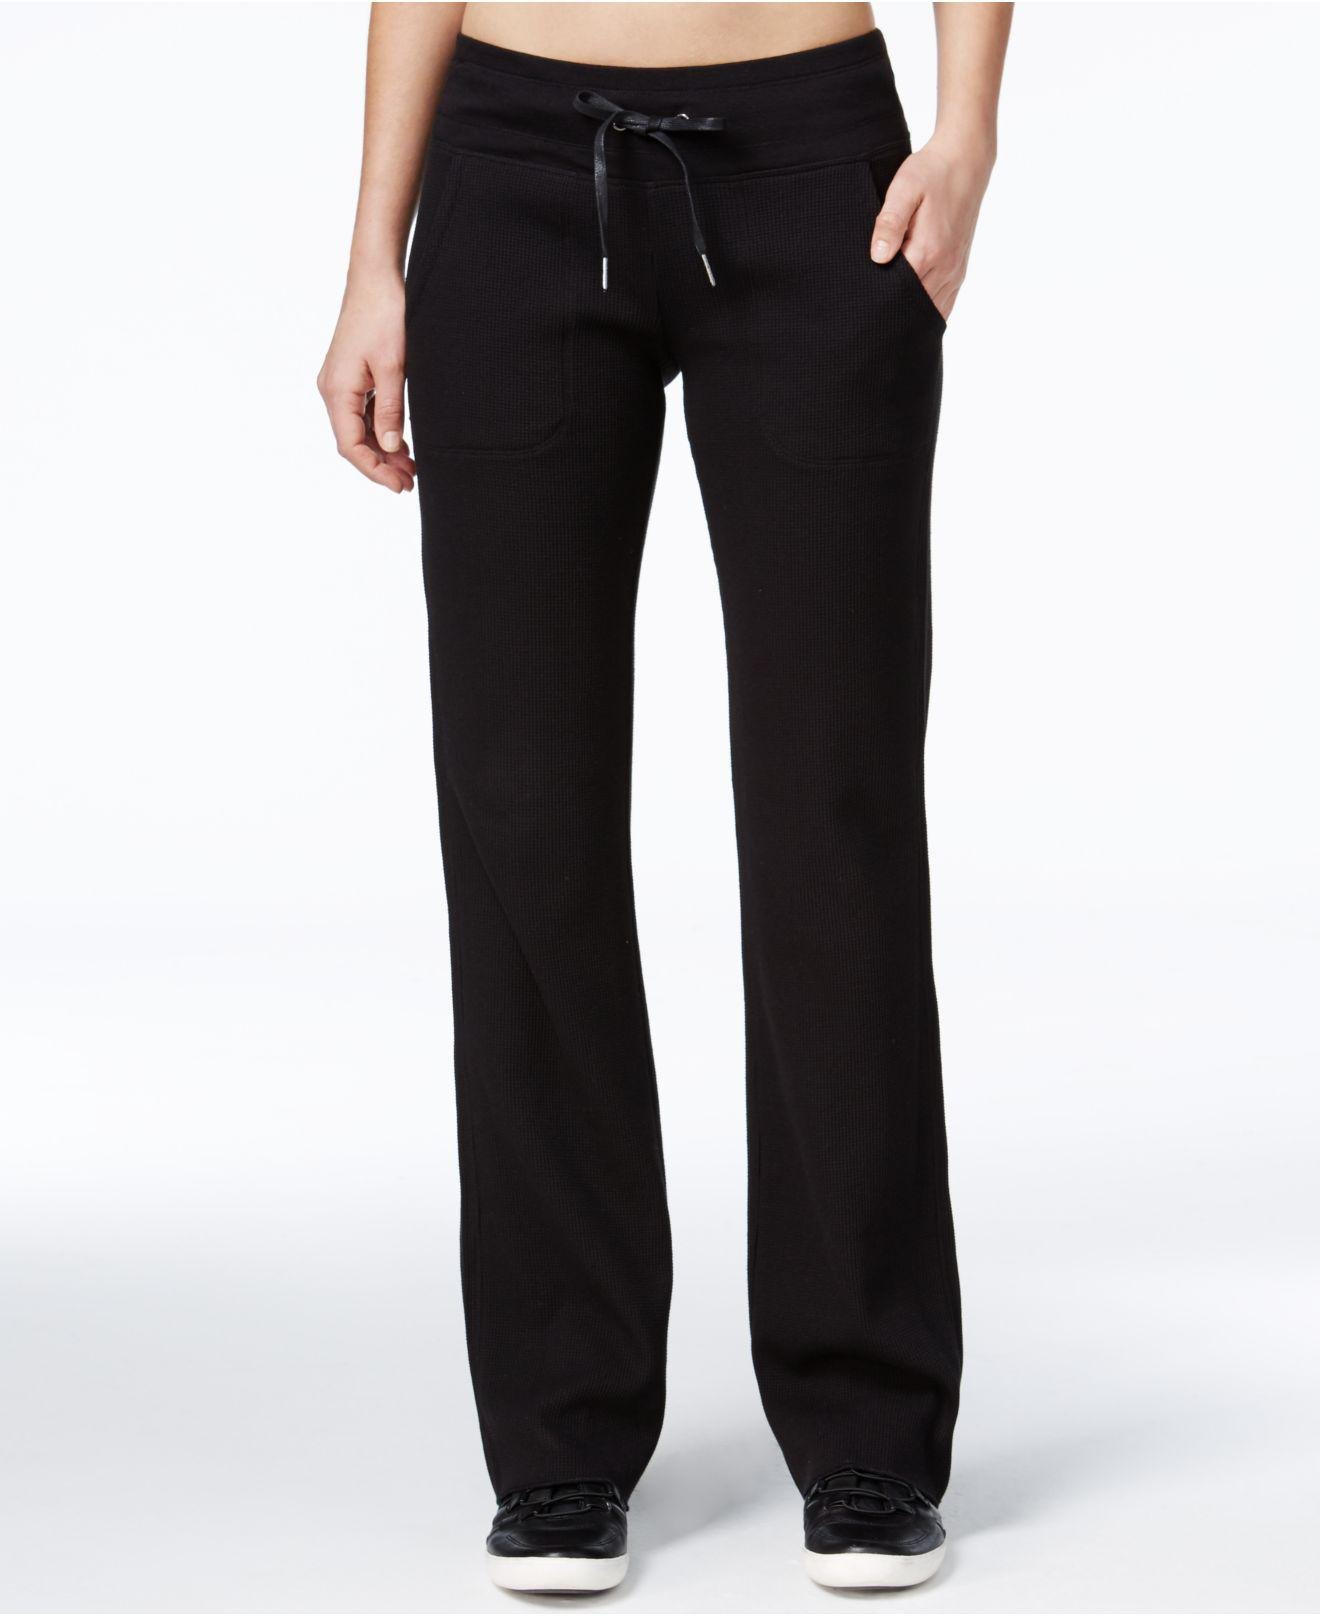 Lyst - Calvin Klein Yoga Pants in Black - Save 44.11764705882353%